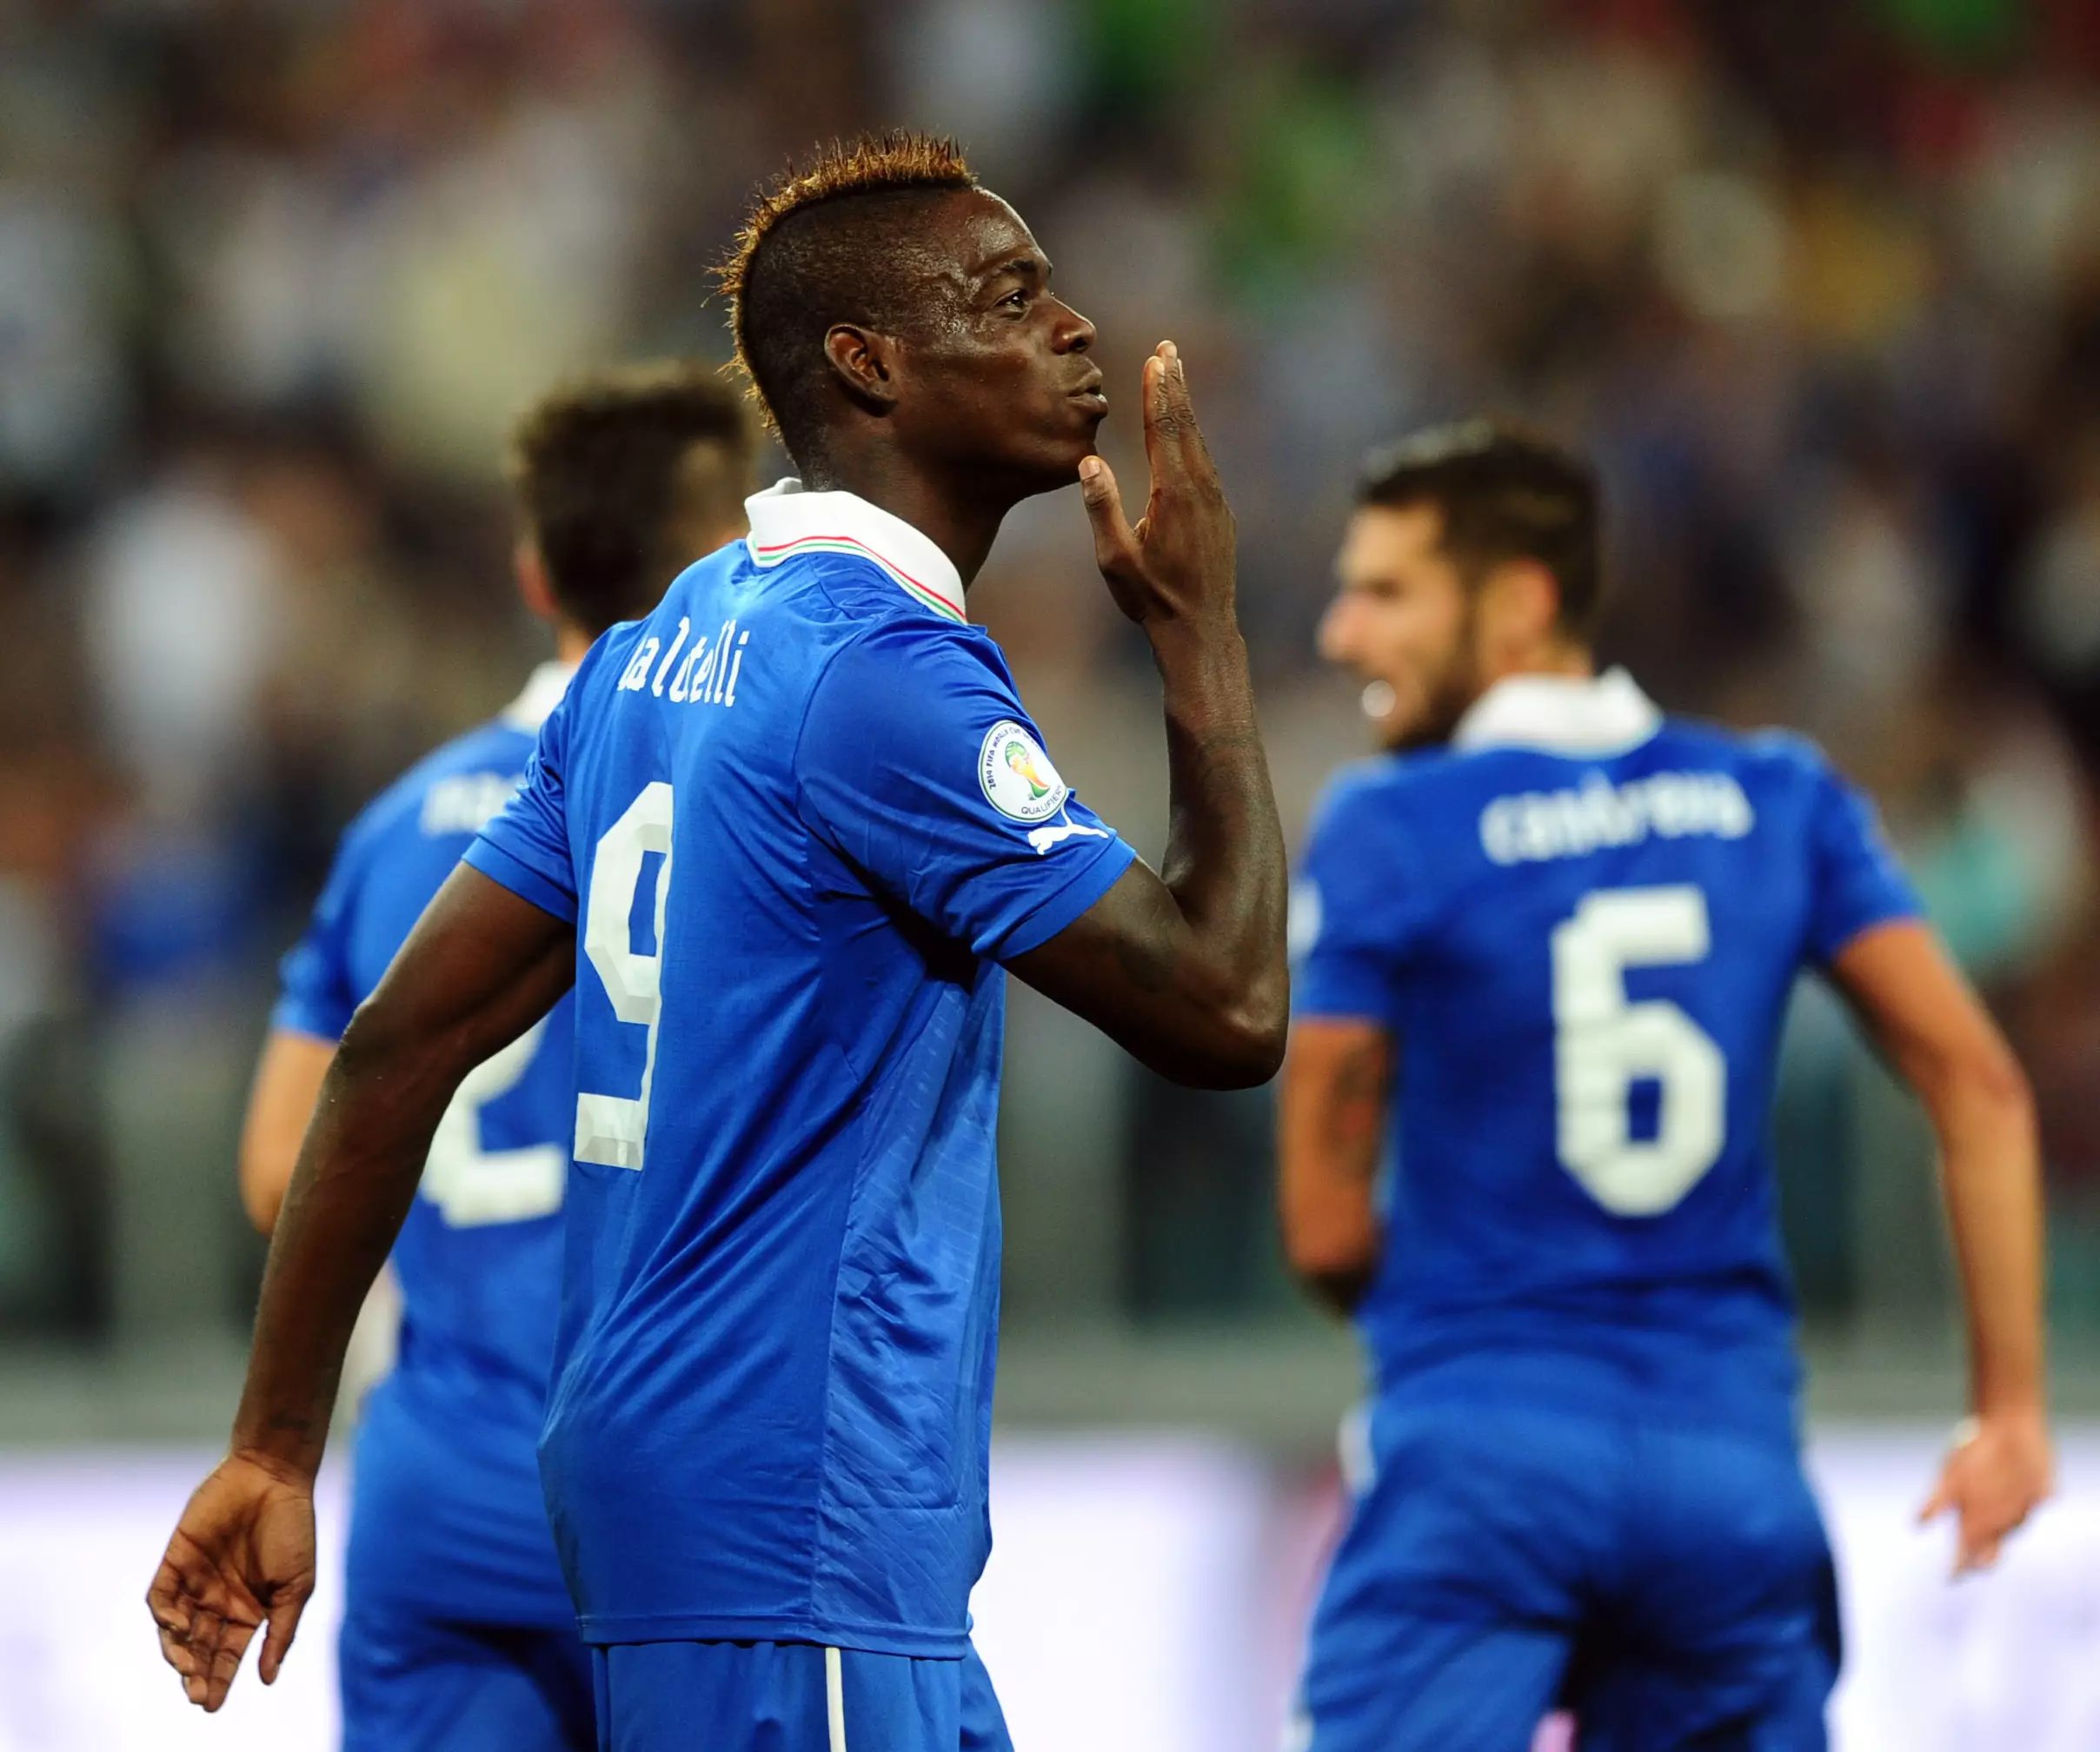 Balotelli celebrates scoring a goal for Italy. Image: PA